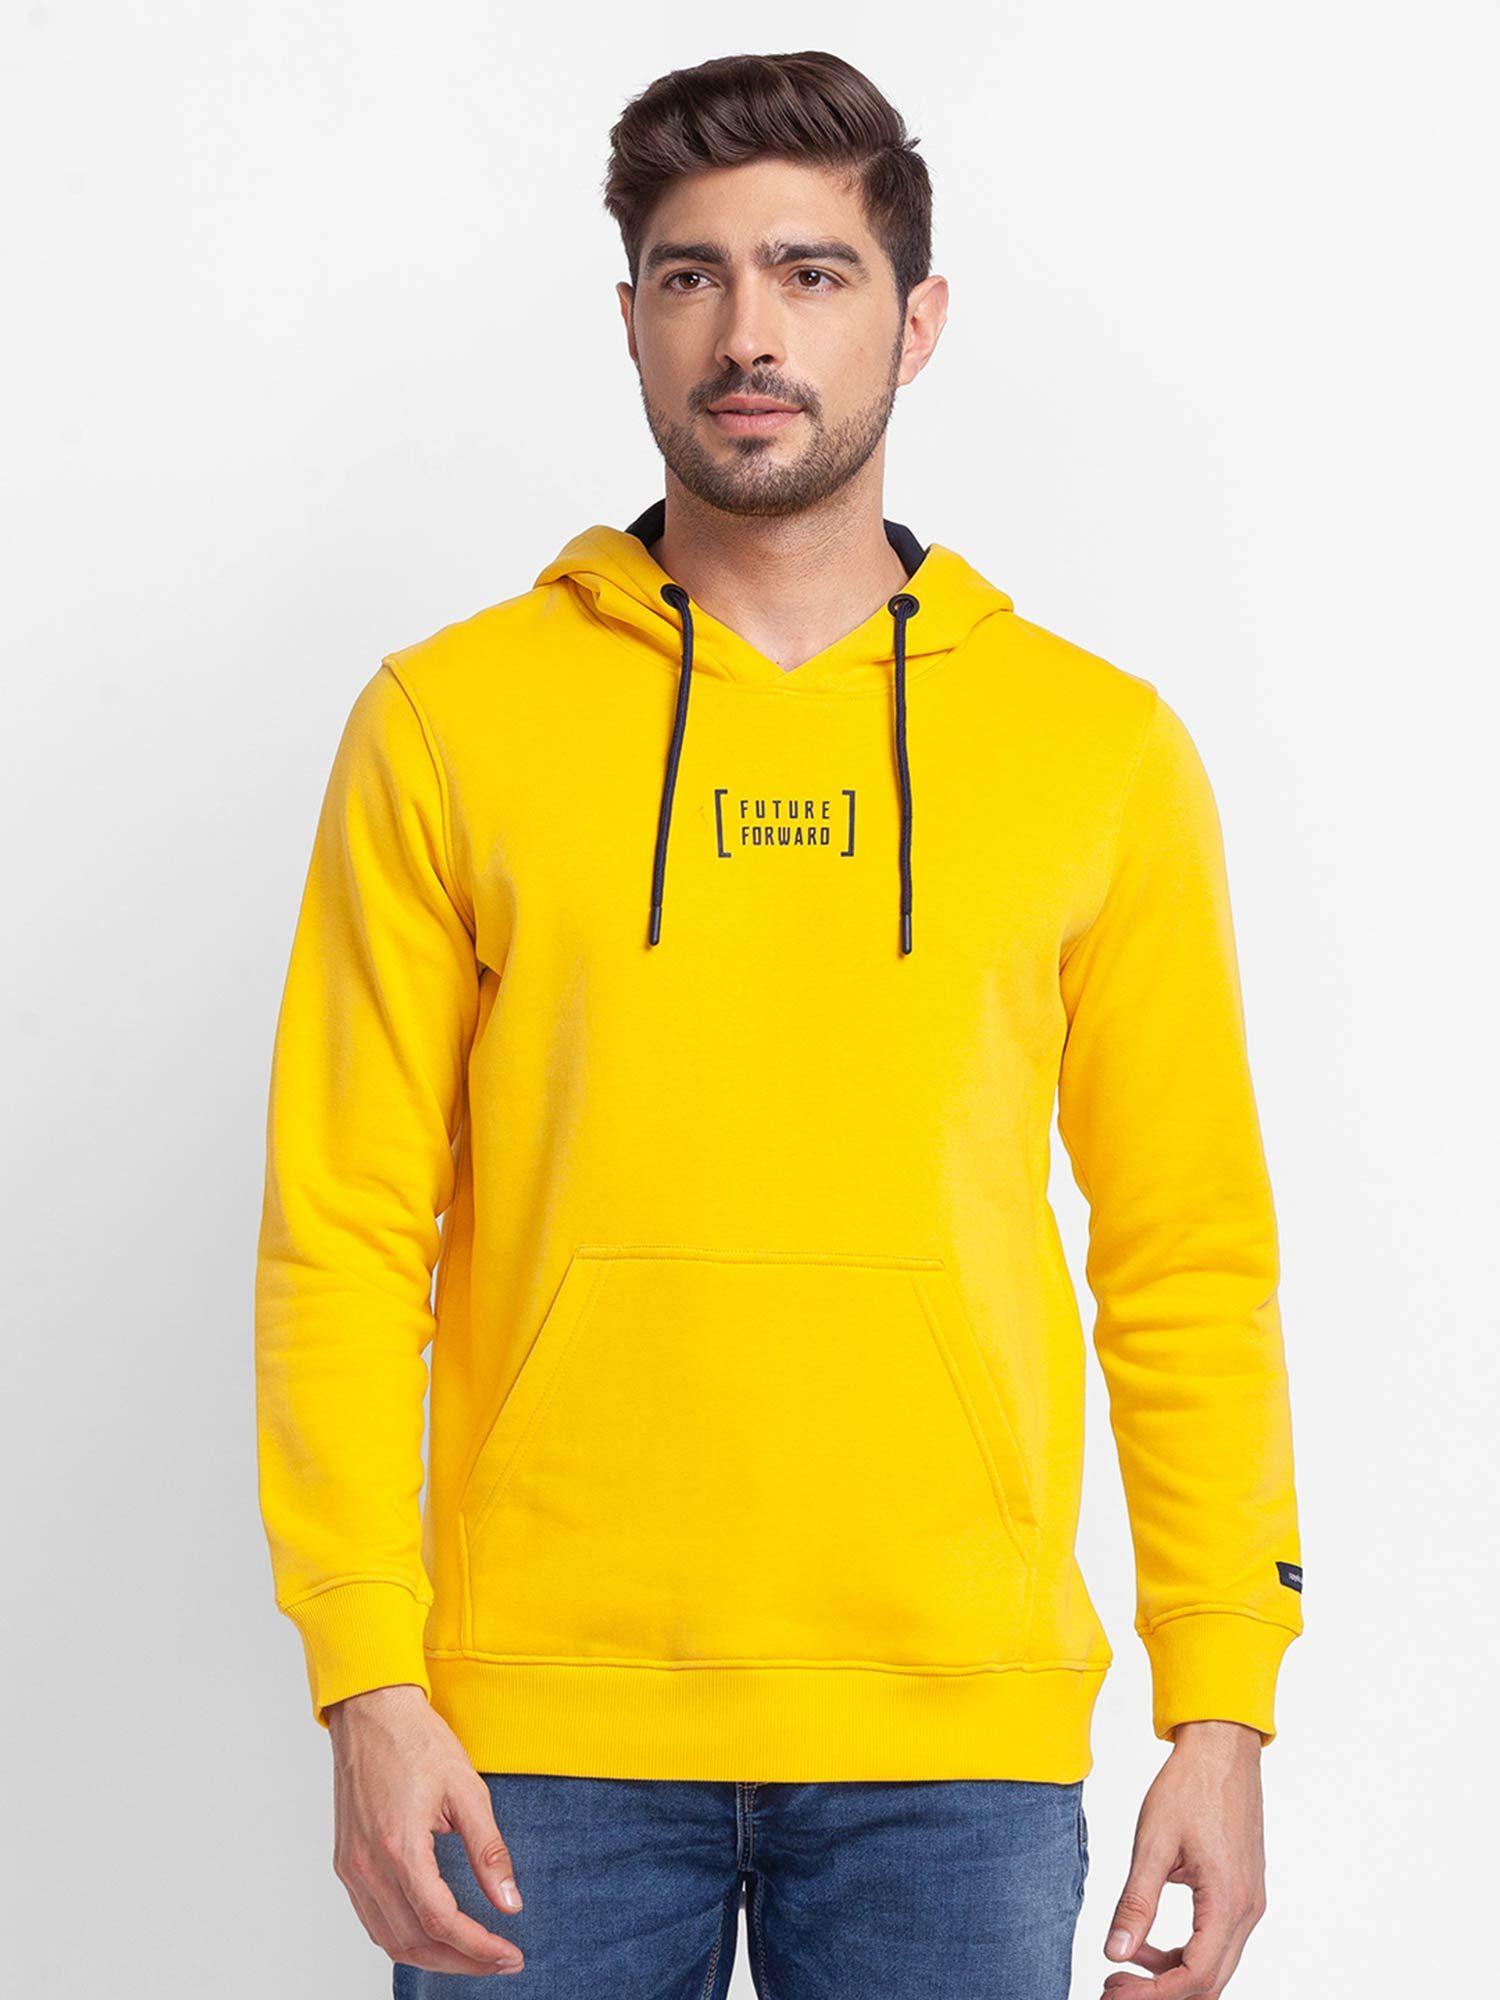 chrome yellow cotton full sleeve hooded sweatshirt for men